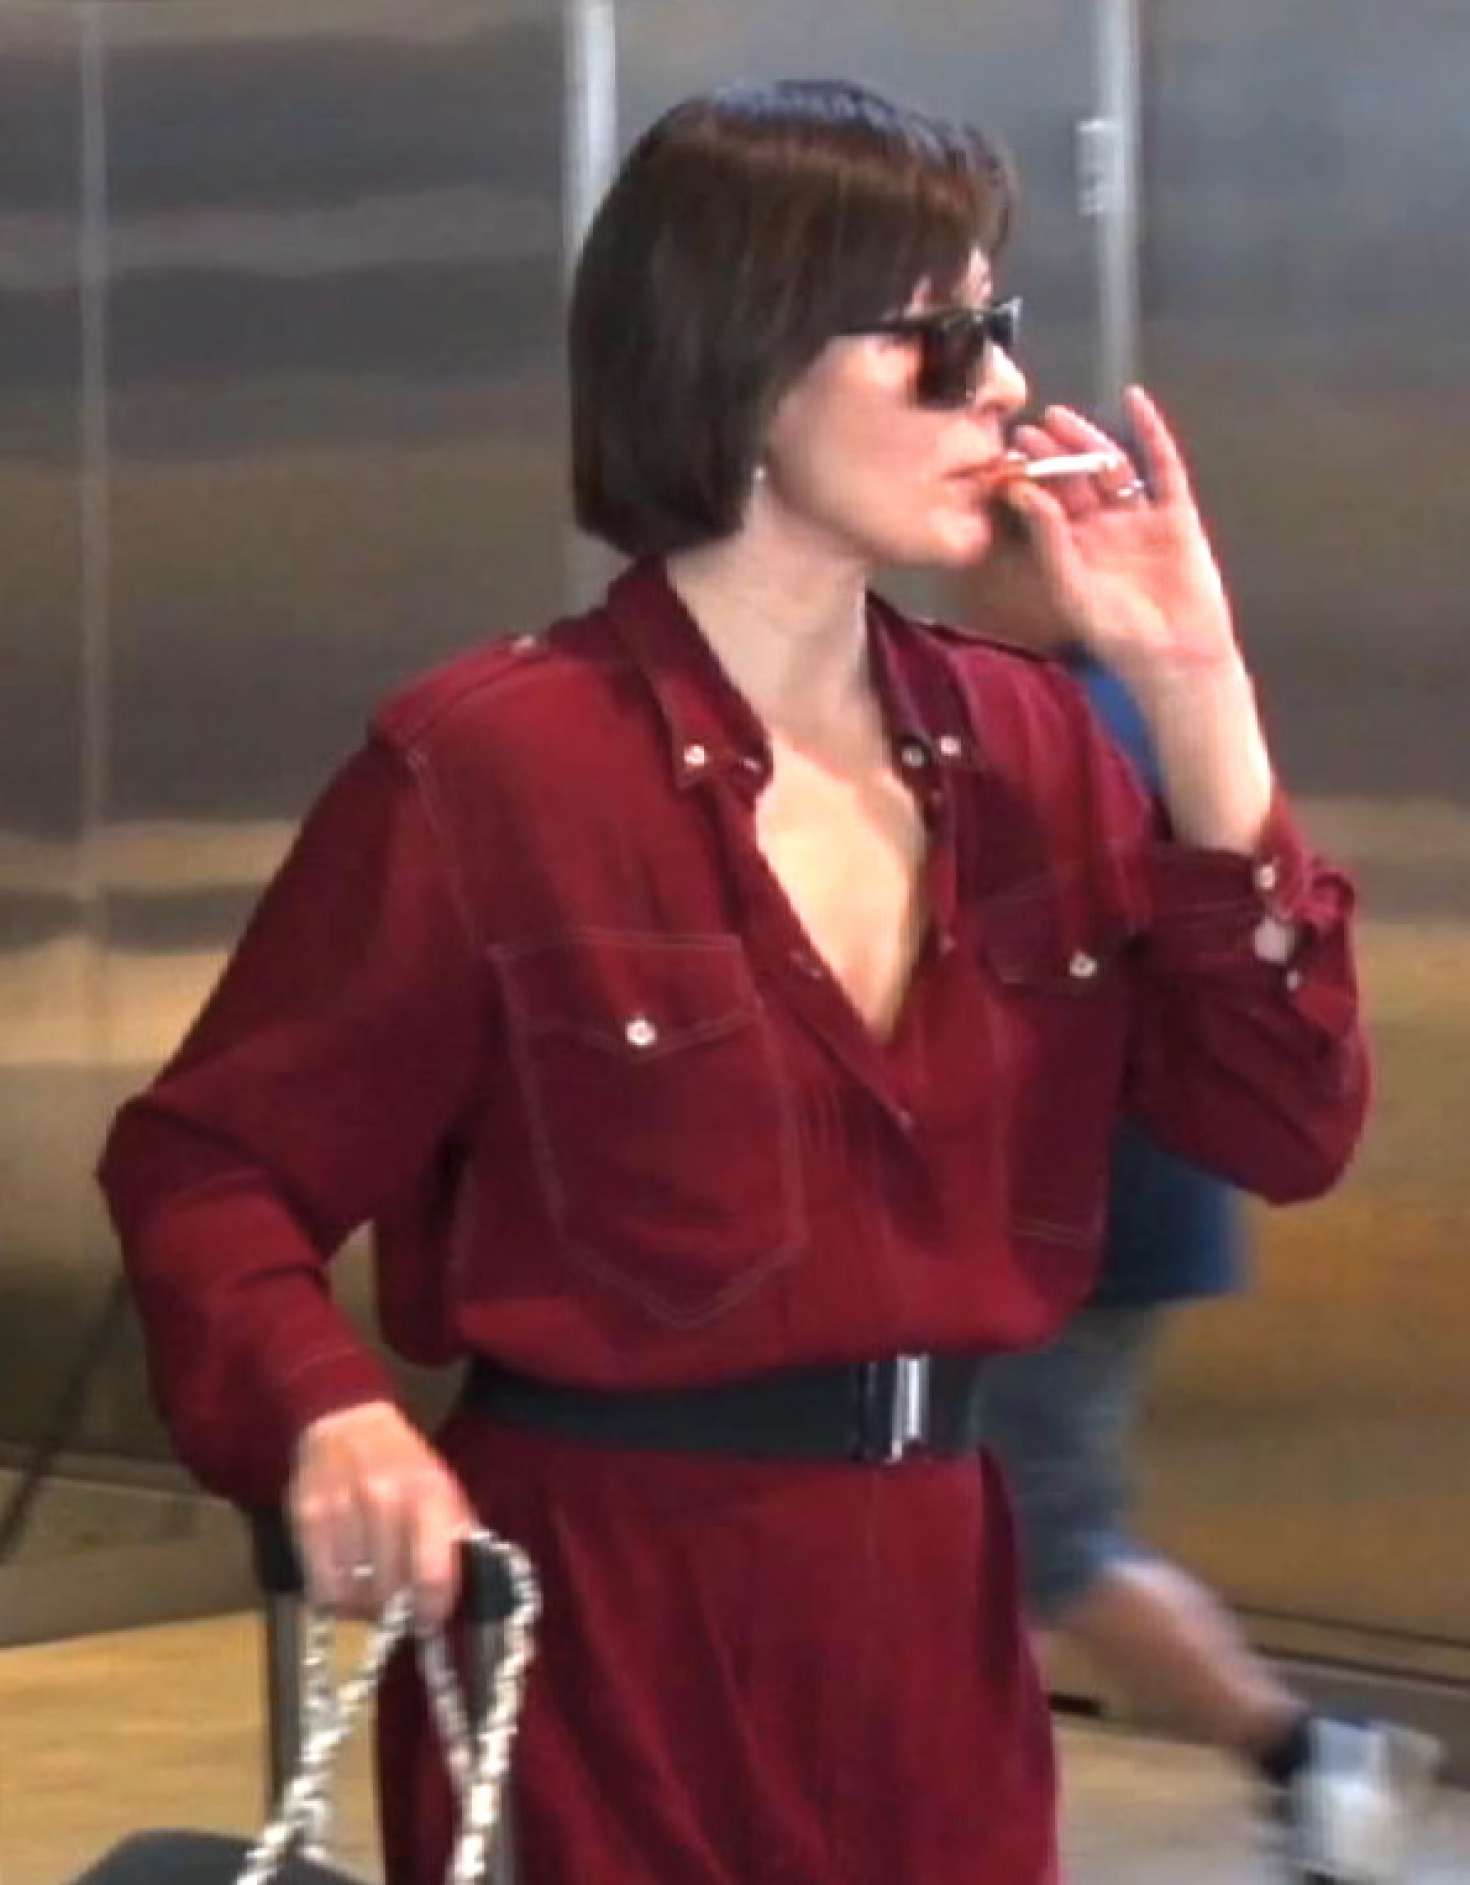 Milla Jovovich 2017 : Milla Jovovich in Red Dress at LAX Airport -06. 